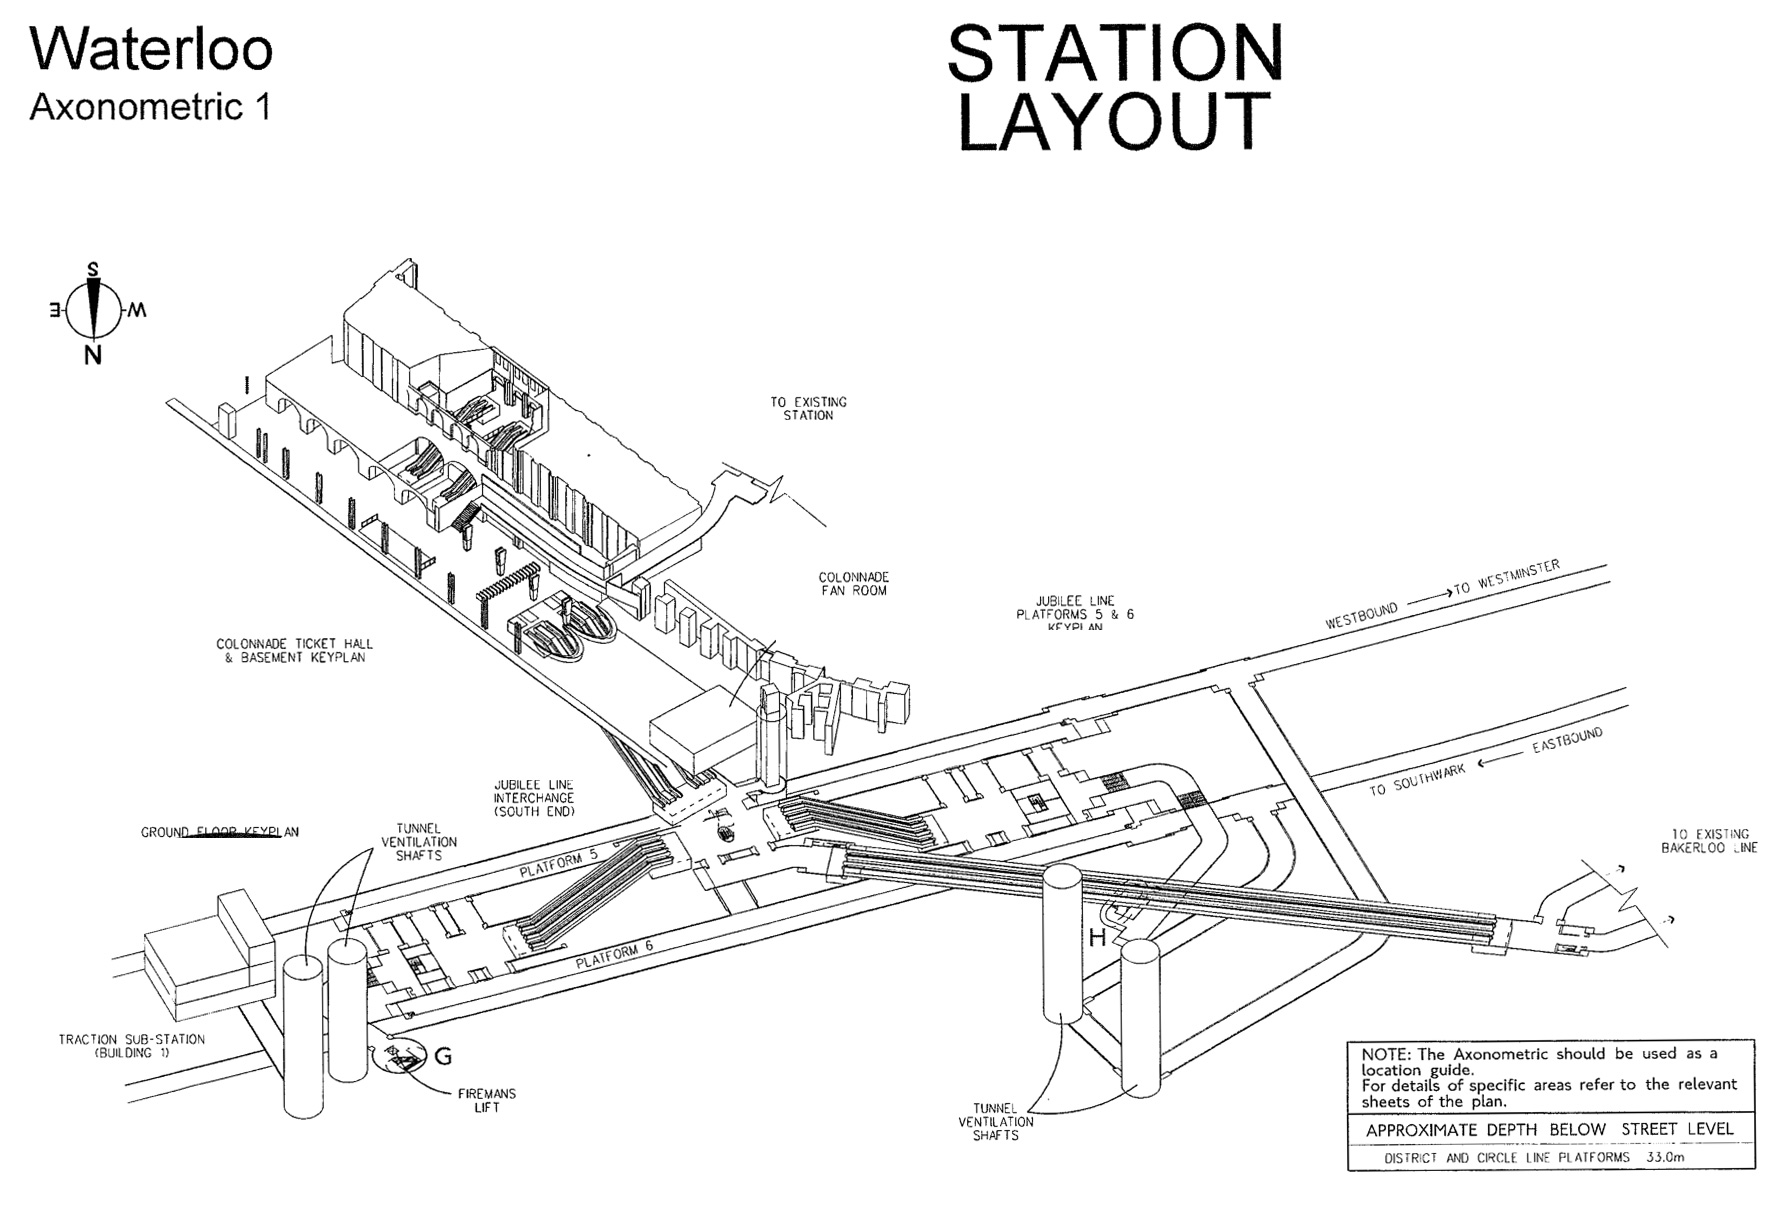 diagramme-3d-station-metro-londres-waterloo-image1-09